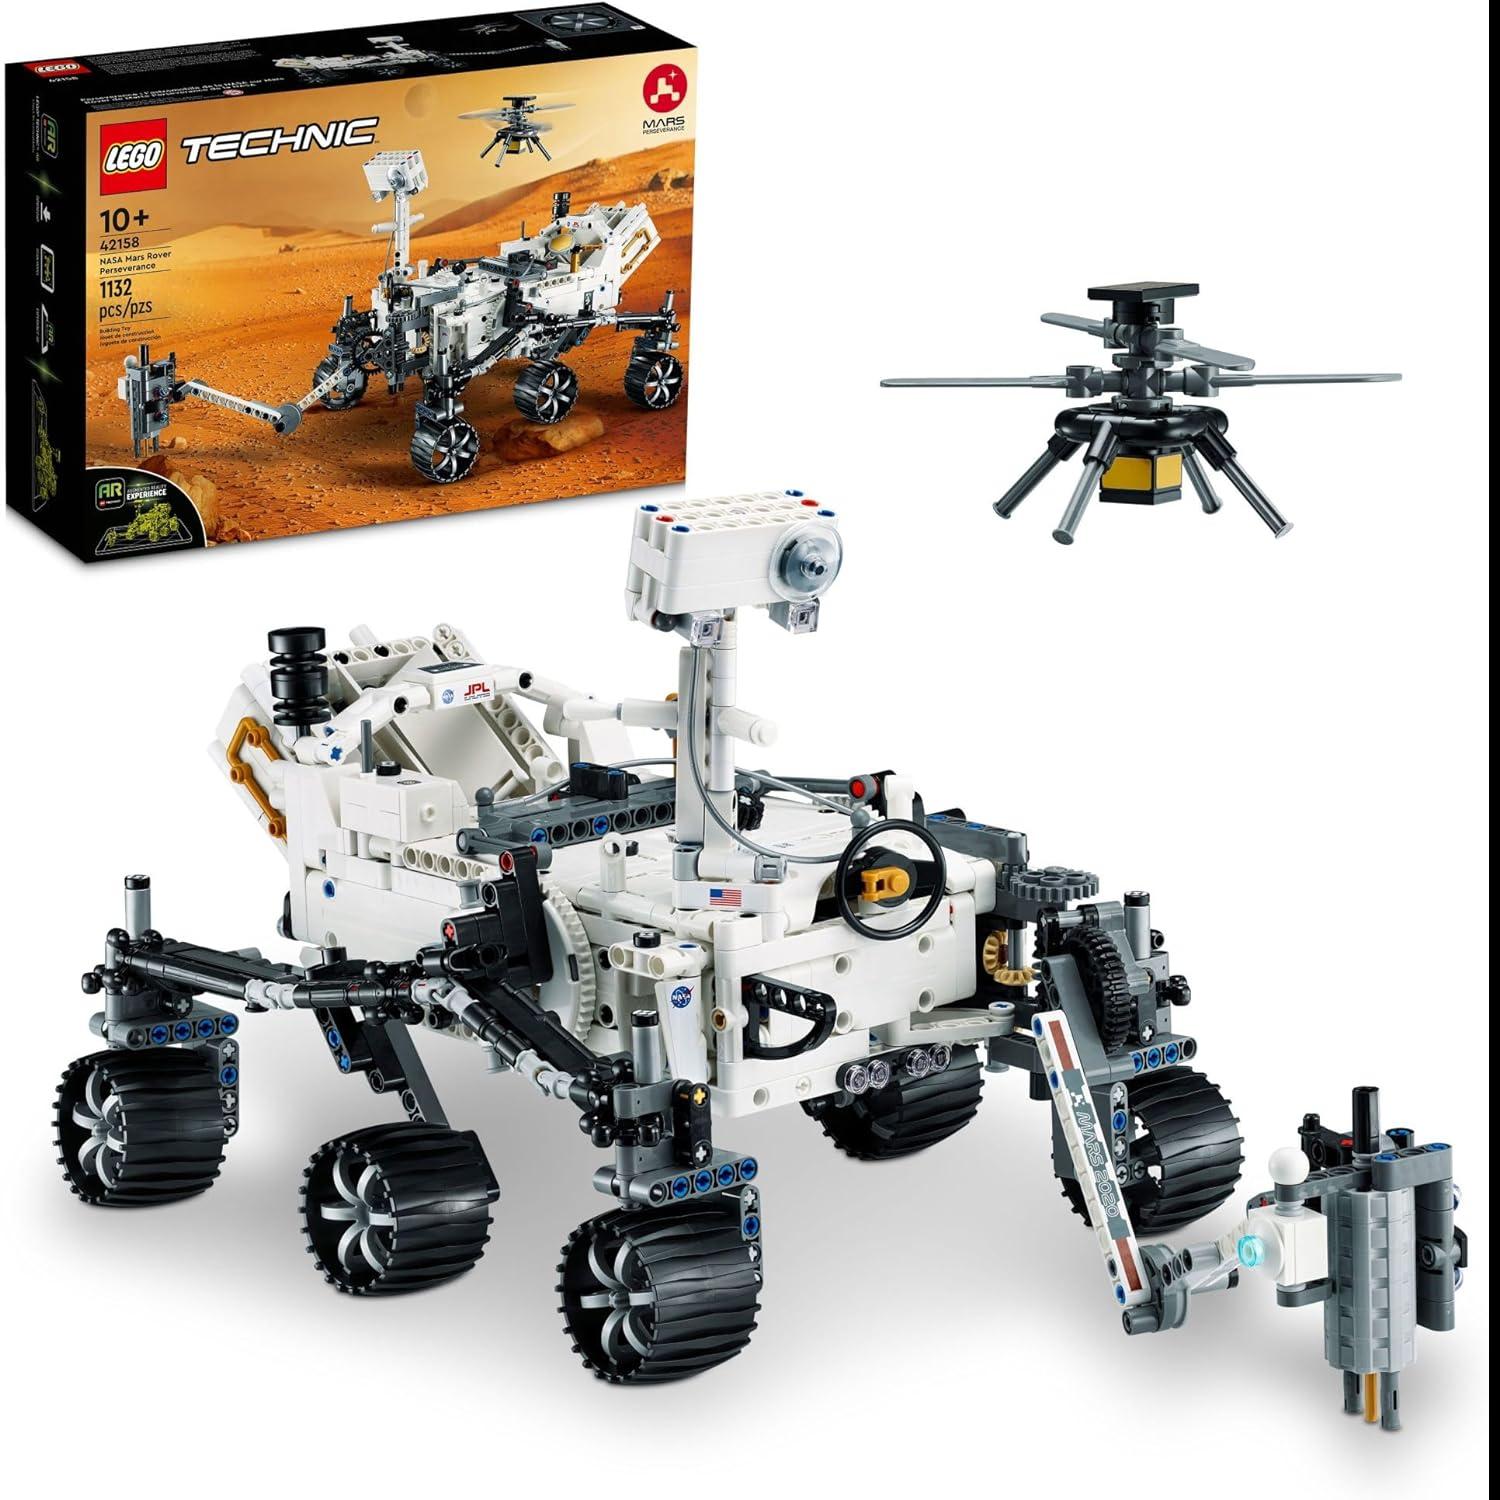 Lego Technic NASA Mars Rover Perseverance Building Kit for $79.99 Shipped